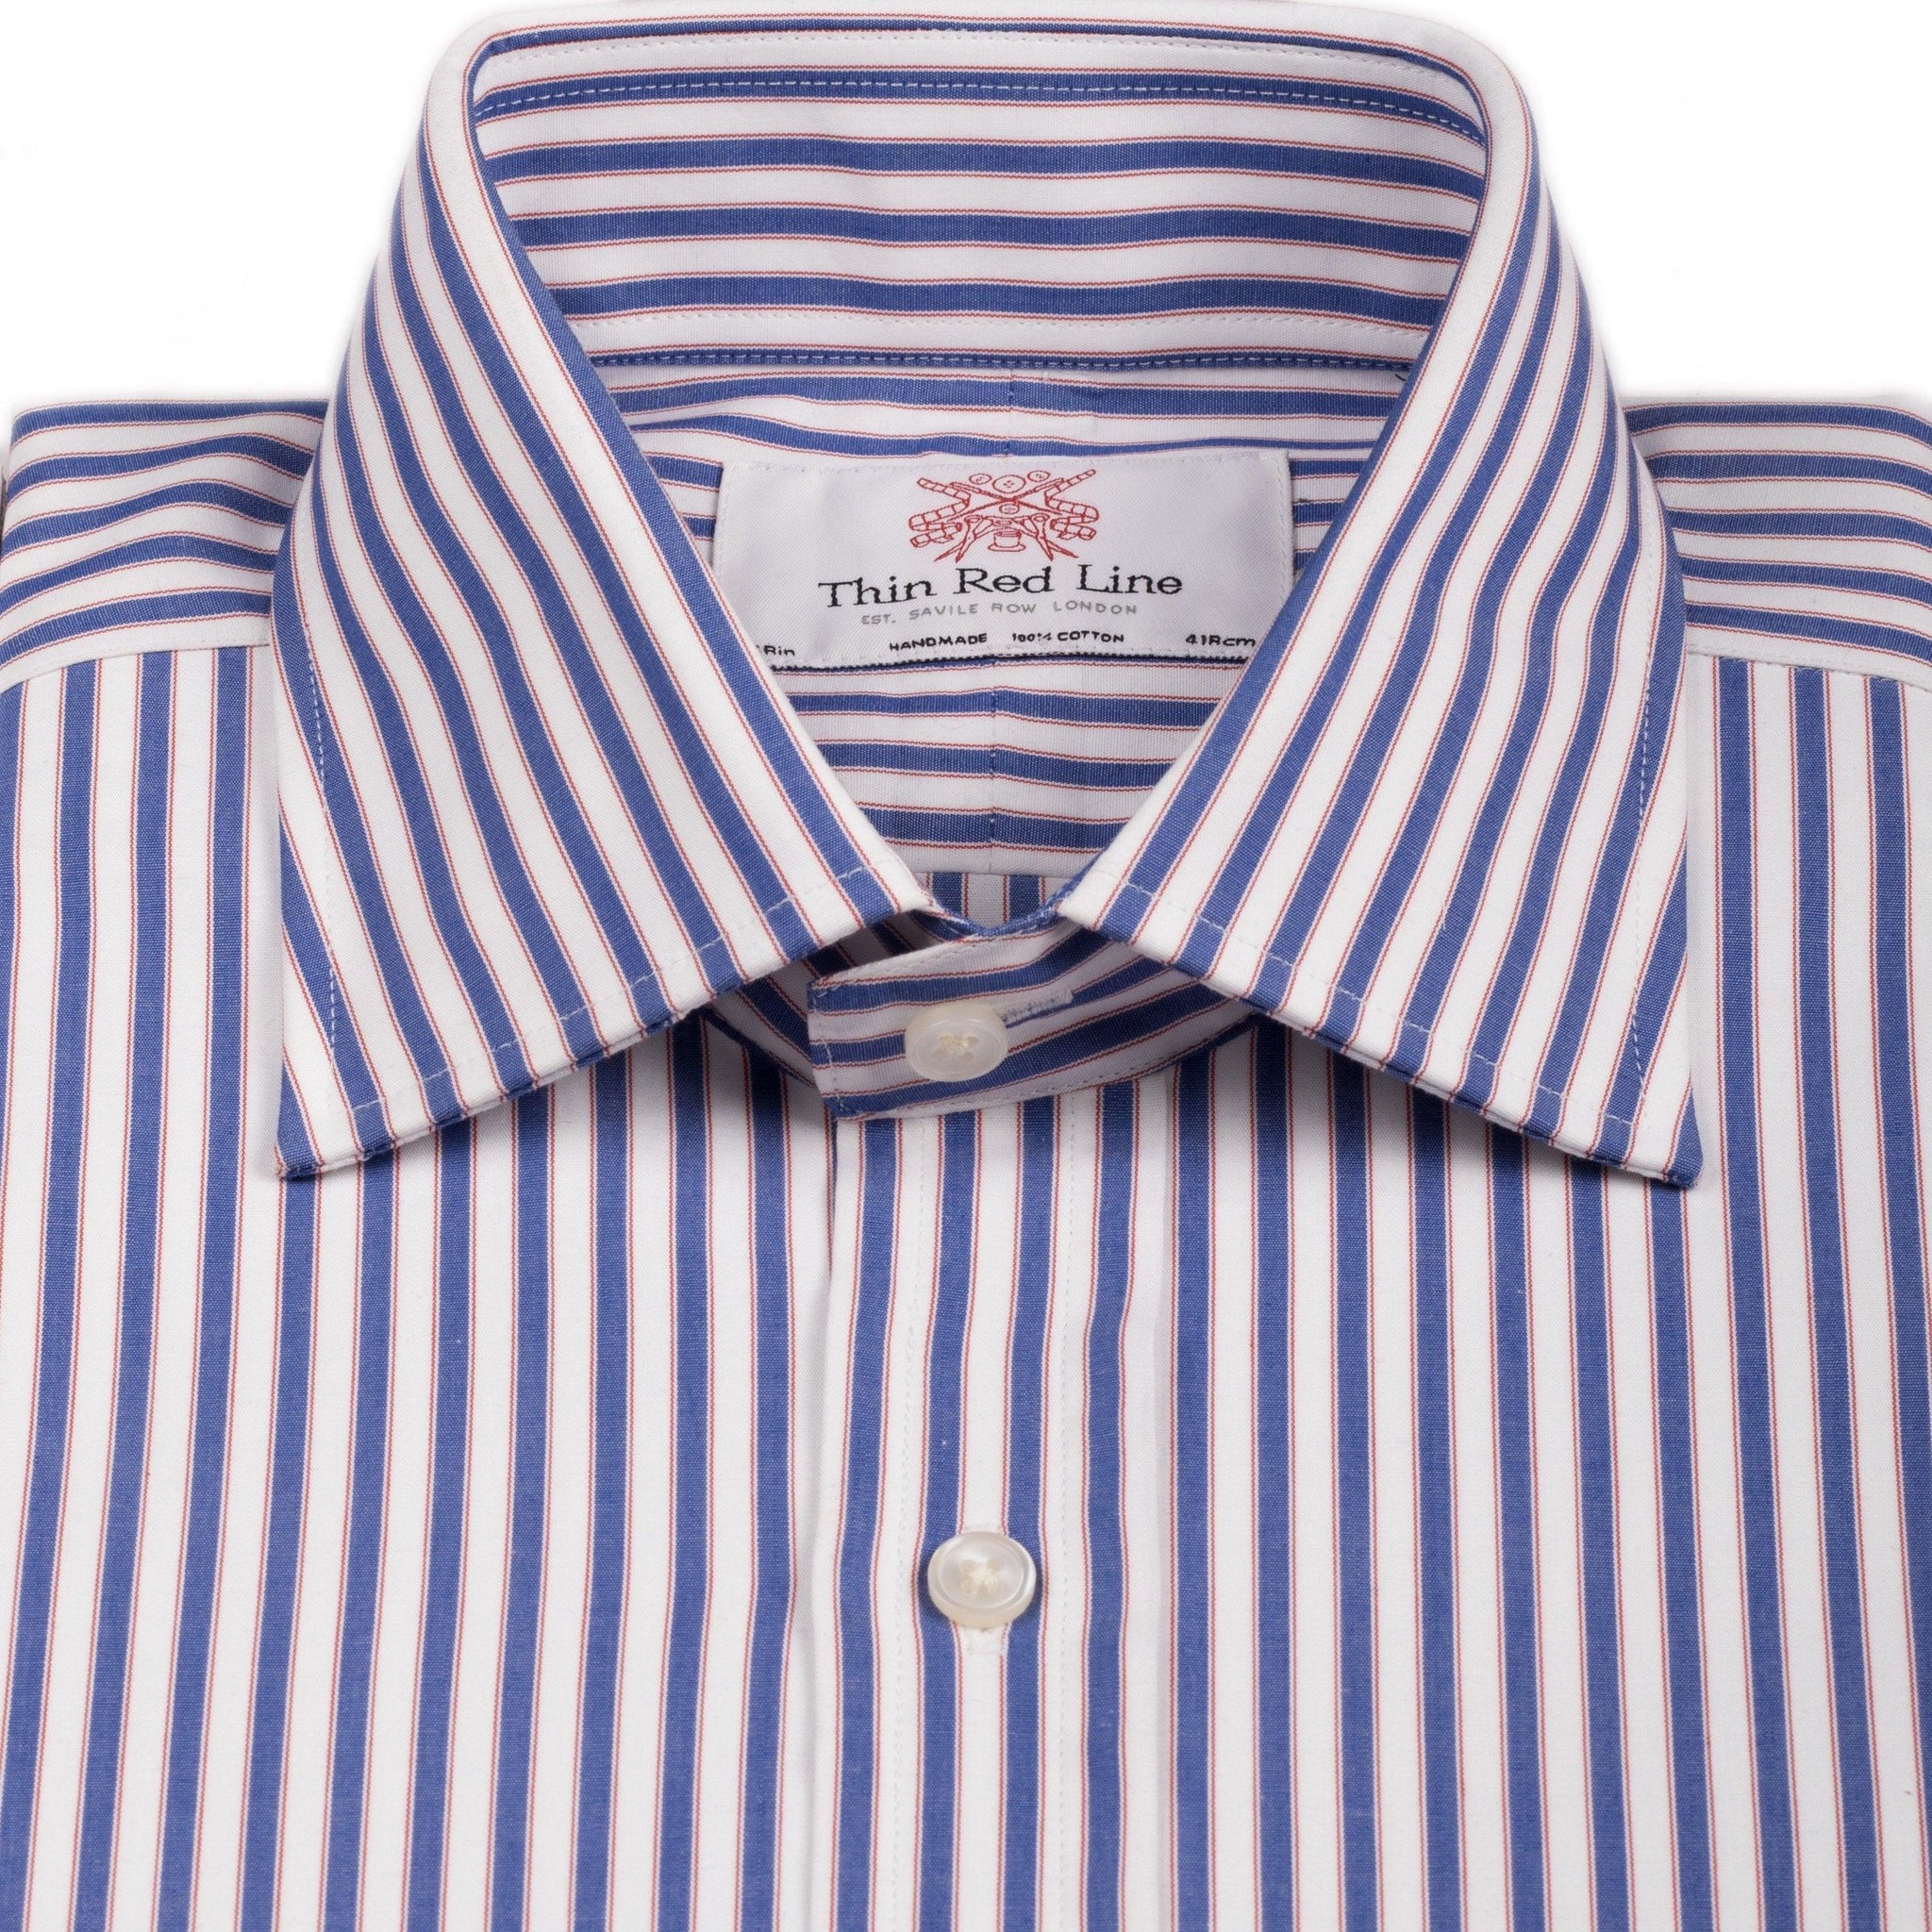 BINGHAM STRIPE BLUE & RED CLASSIC SHIRT | Thin red line men's shirts ...